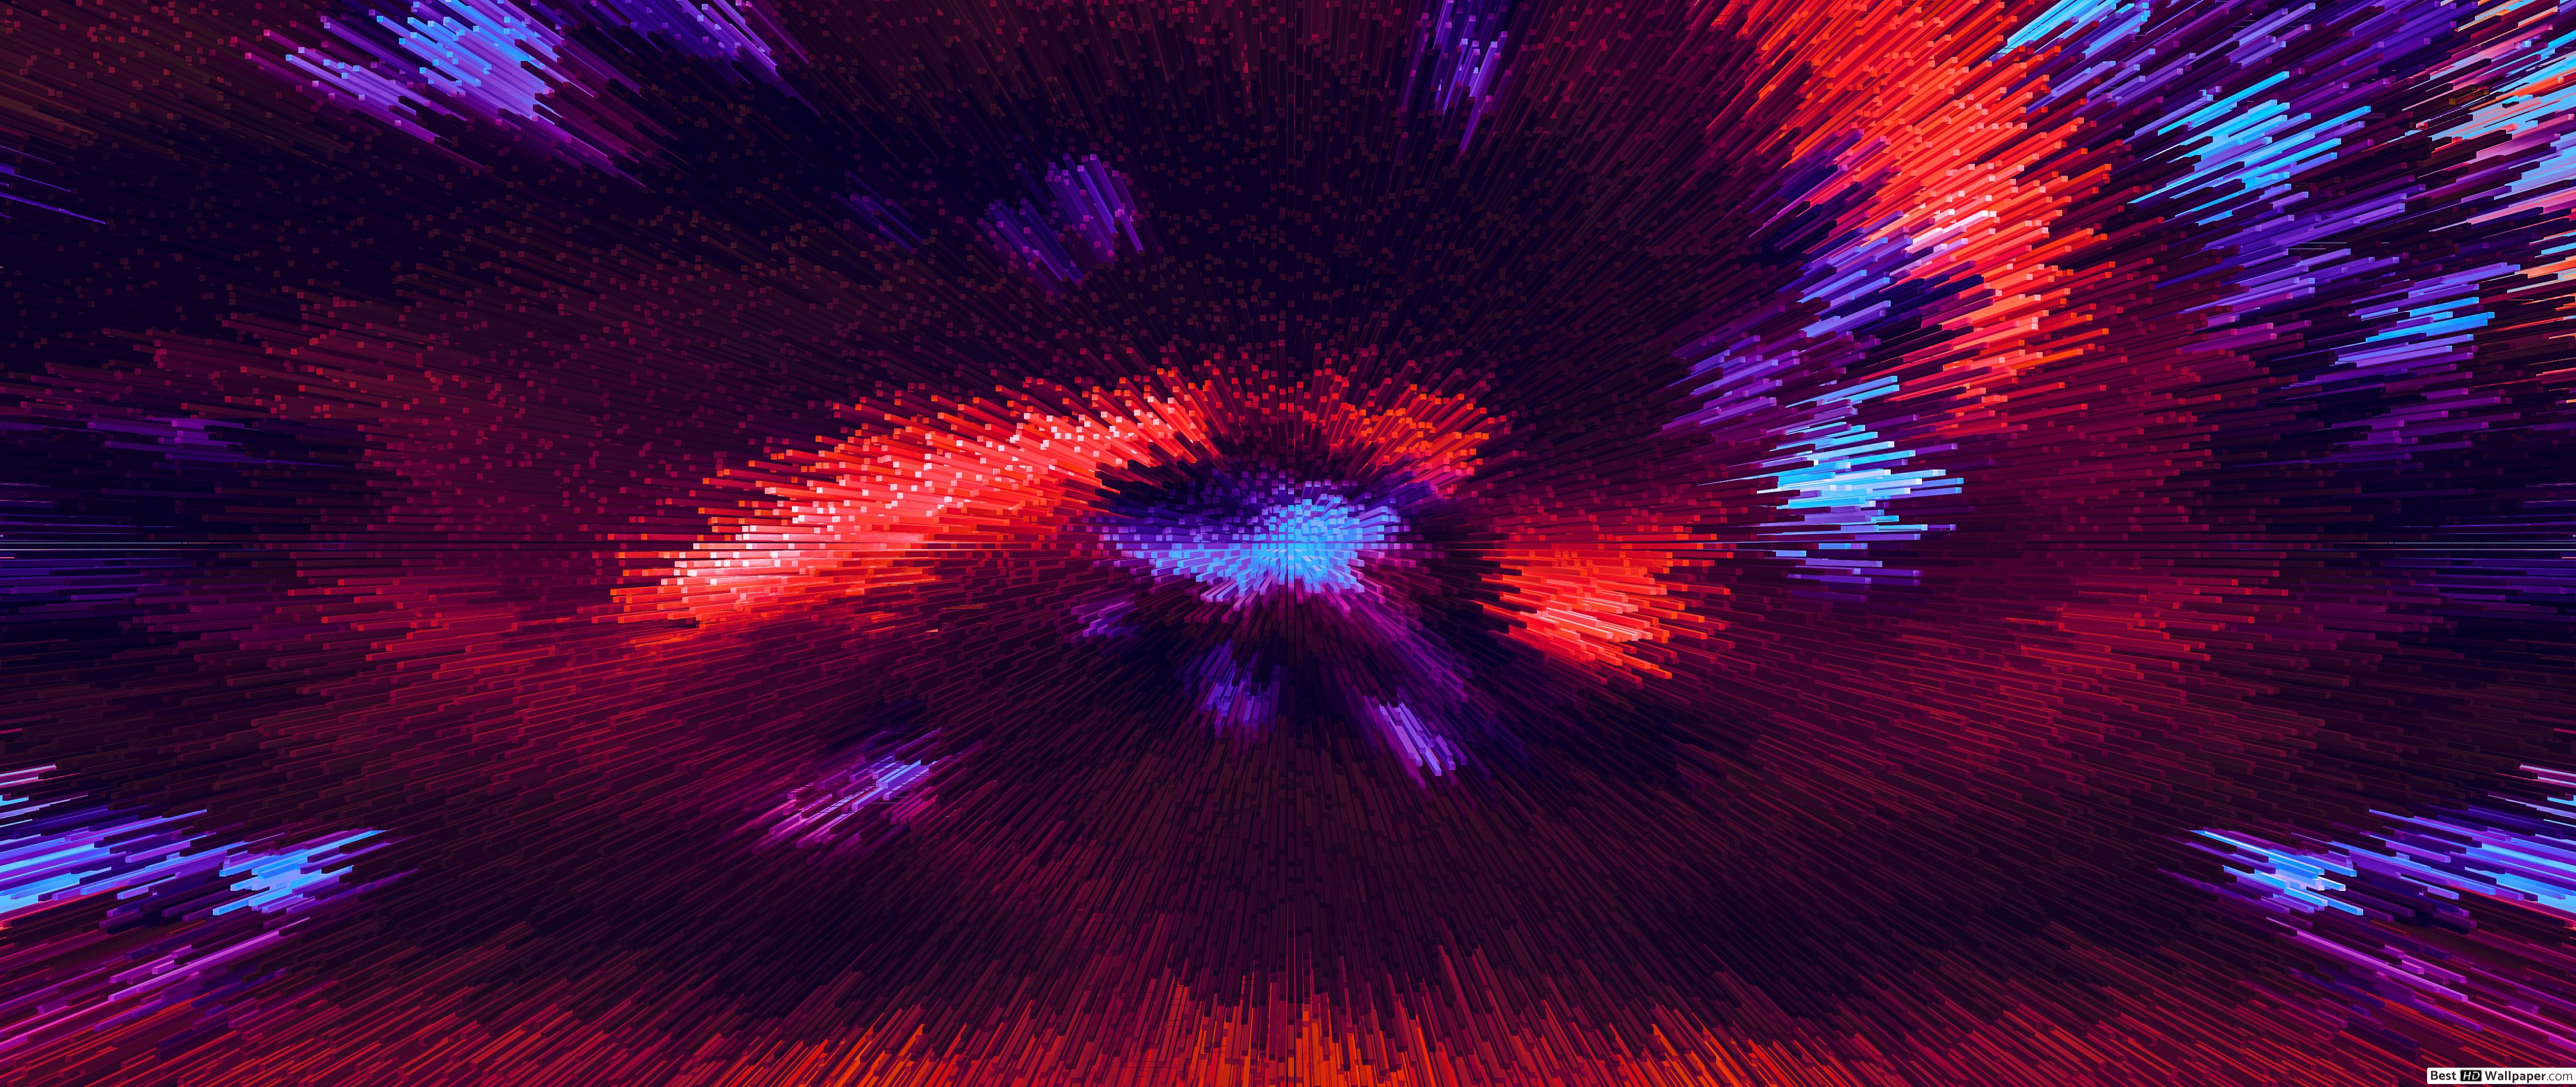 Vibrant burst explosion HD wallpaper download